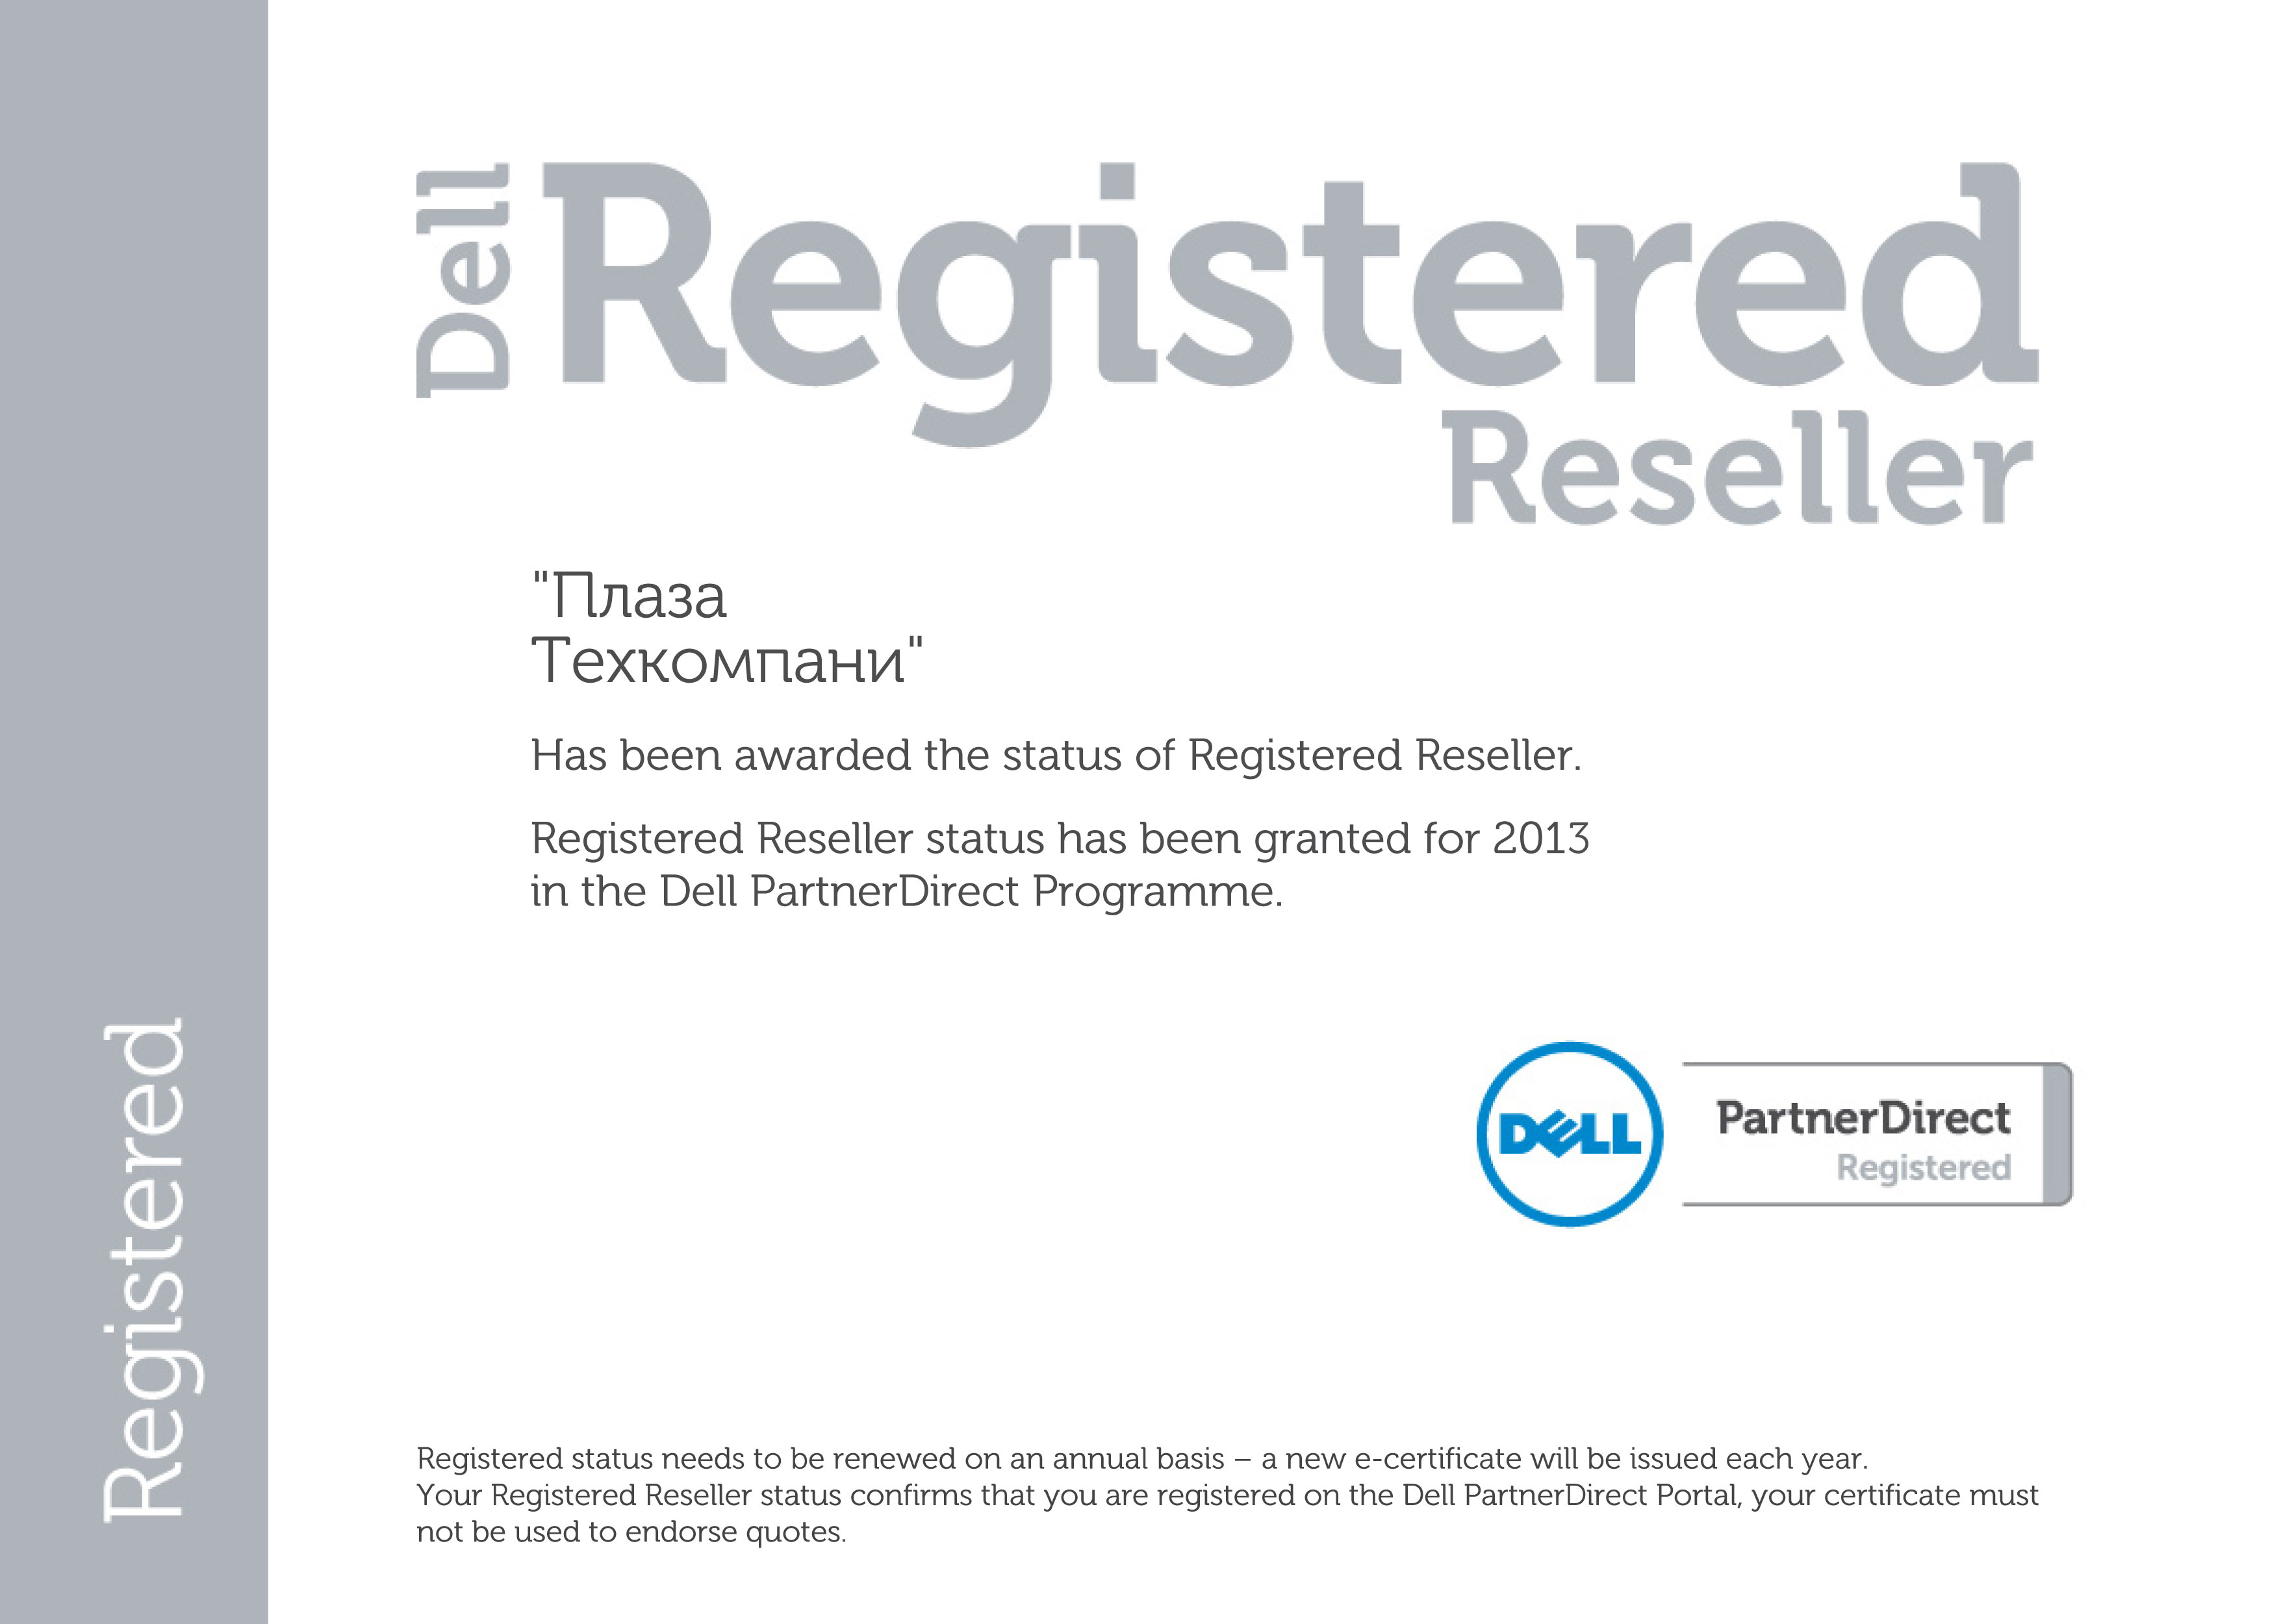 Dell PartnerDirect Registered статус сертифицированного партнера